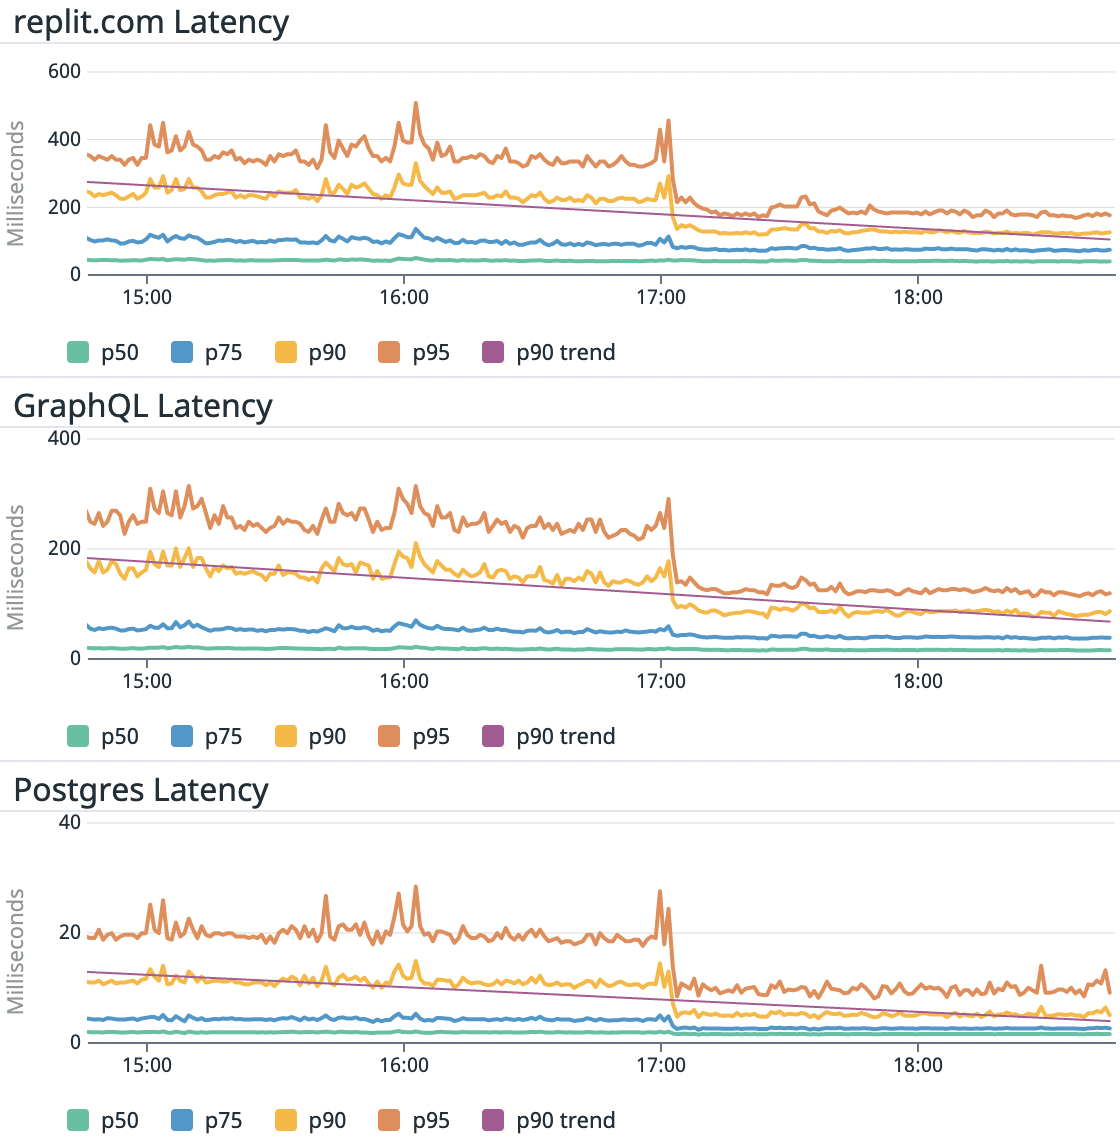 a graph of Replit.com's p95 latency